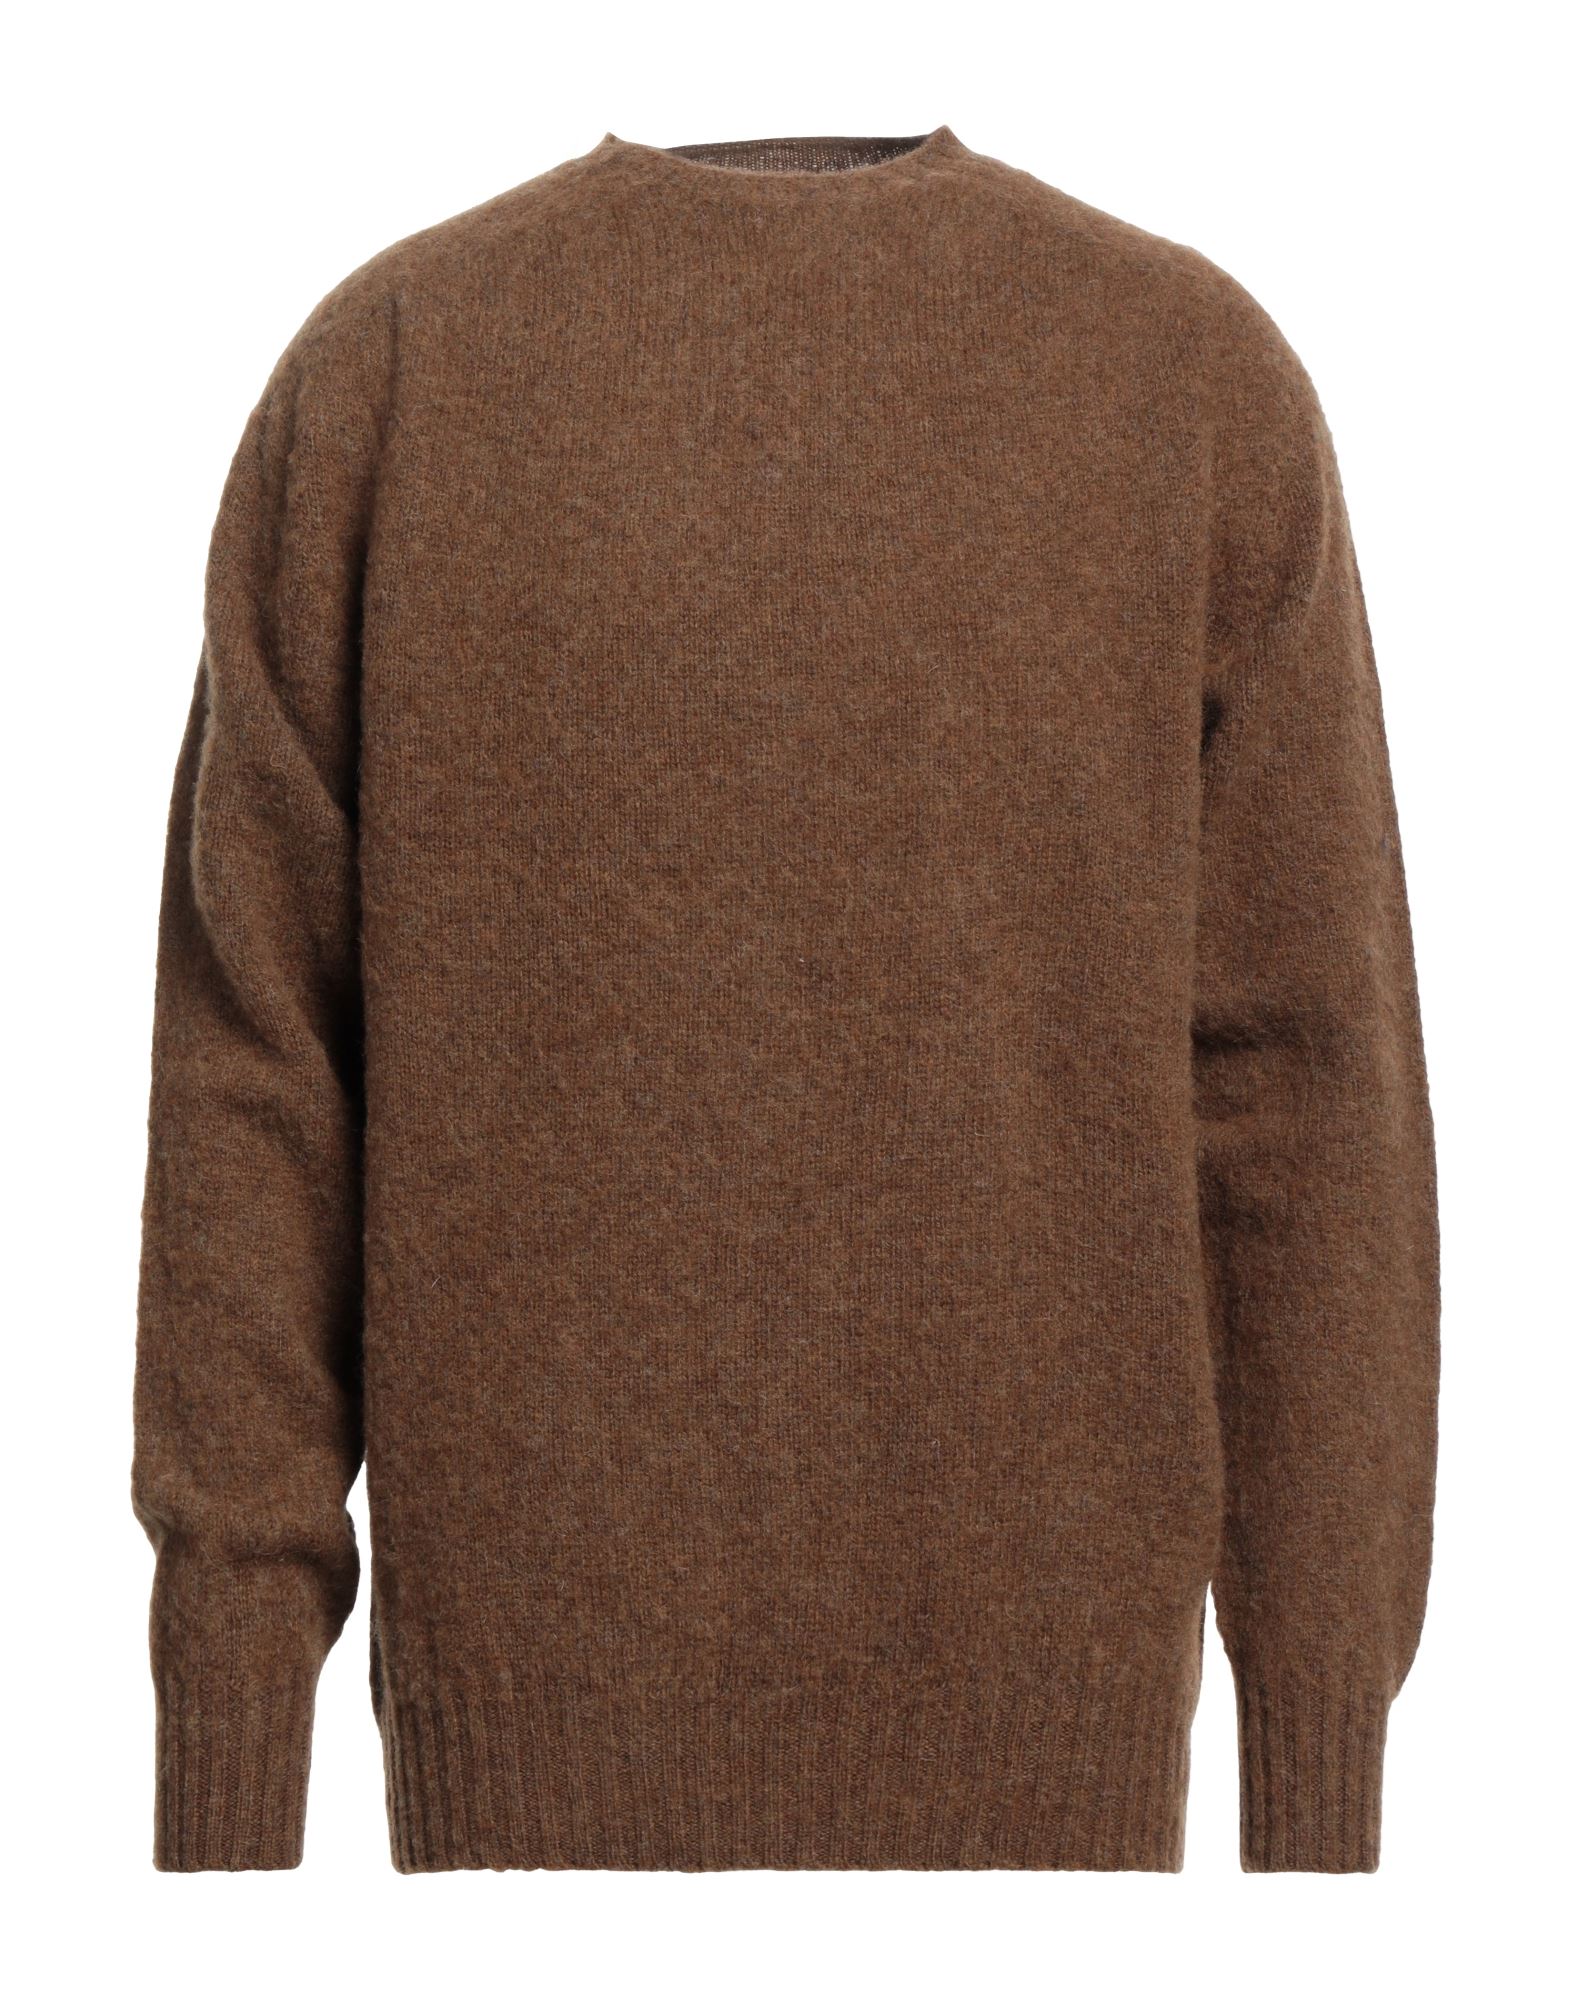 Howlin' Man Sweater Brown Size Xxl Wool